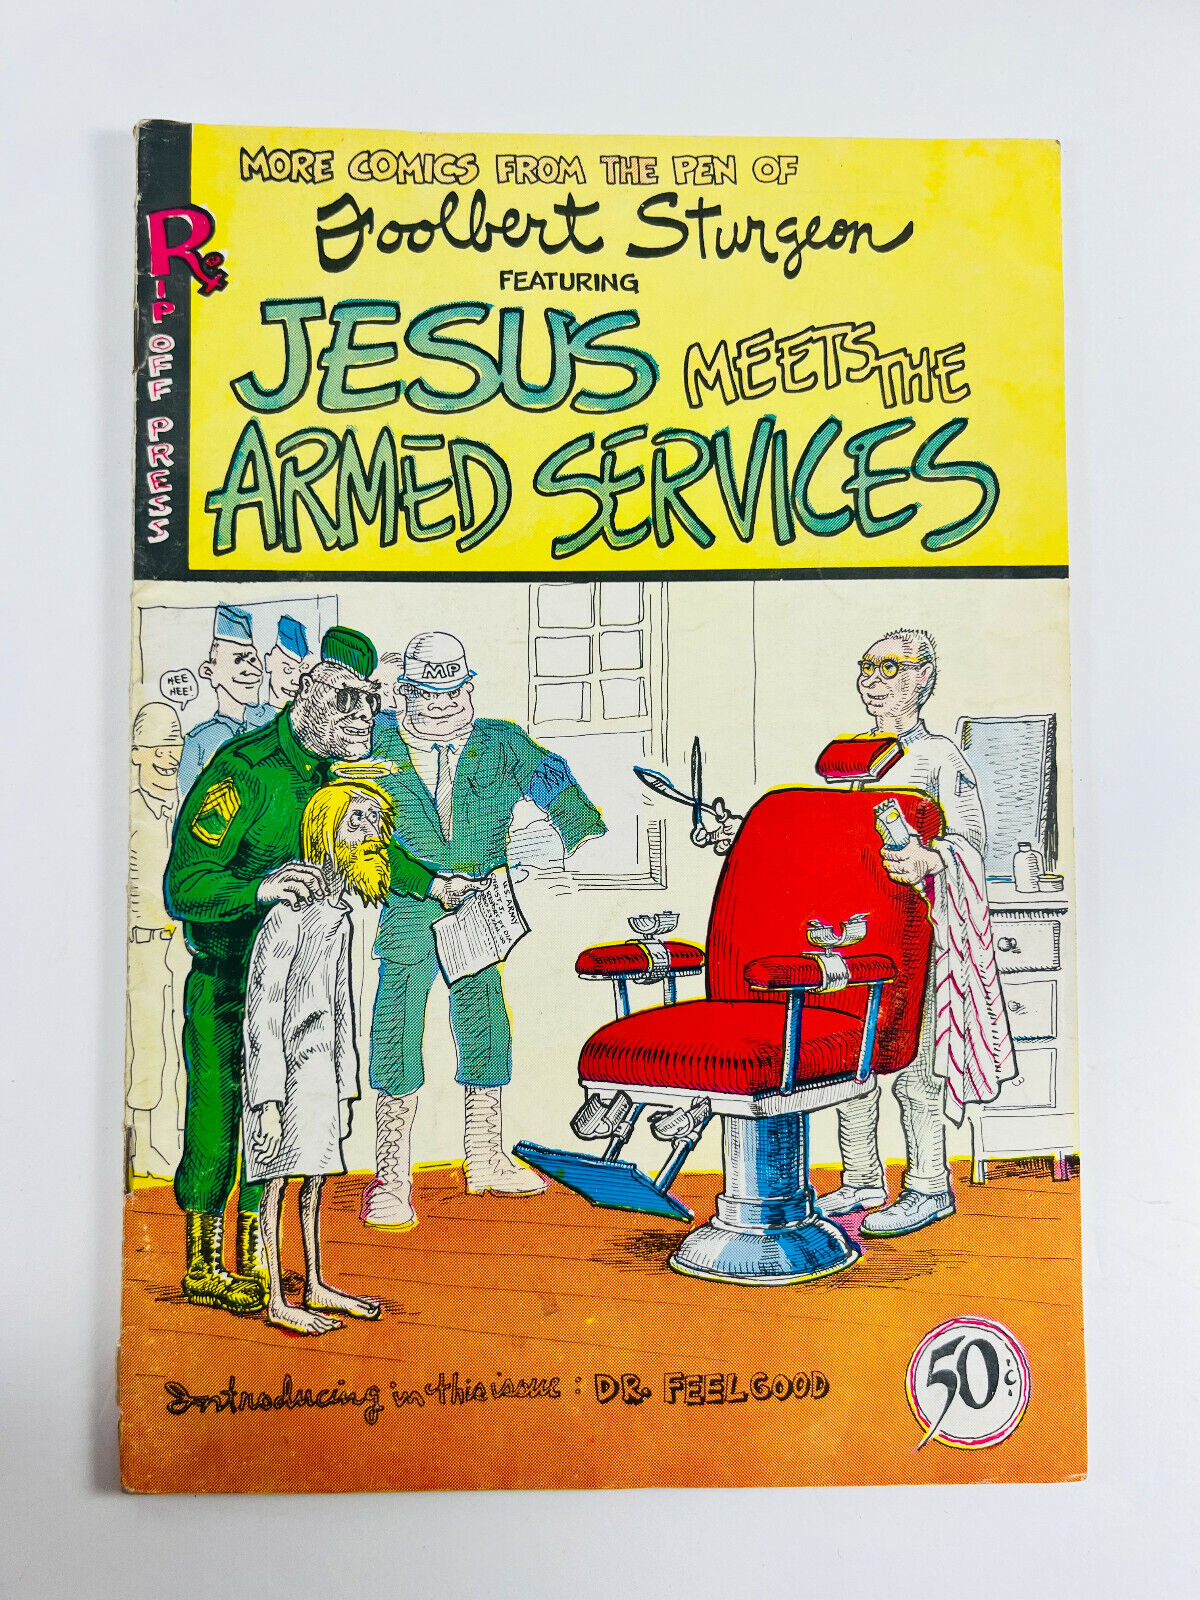 1970 Foolbert Sturgeon Jesus Meets the Armed Services #1 Comic Book R. Crumb